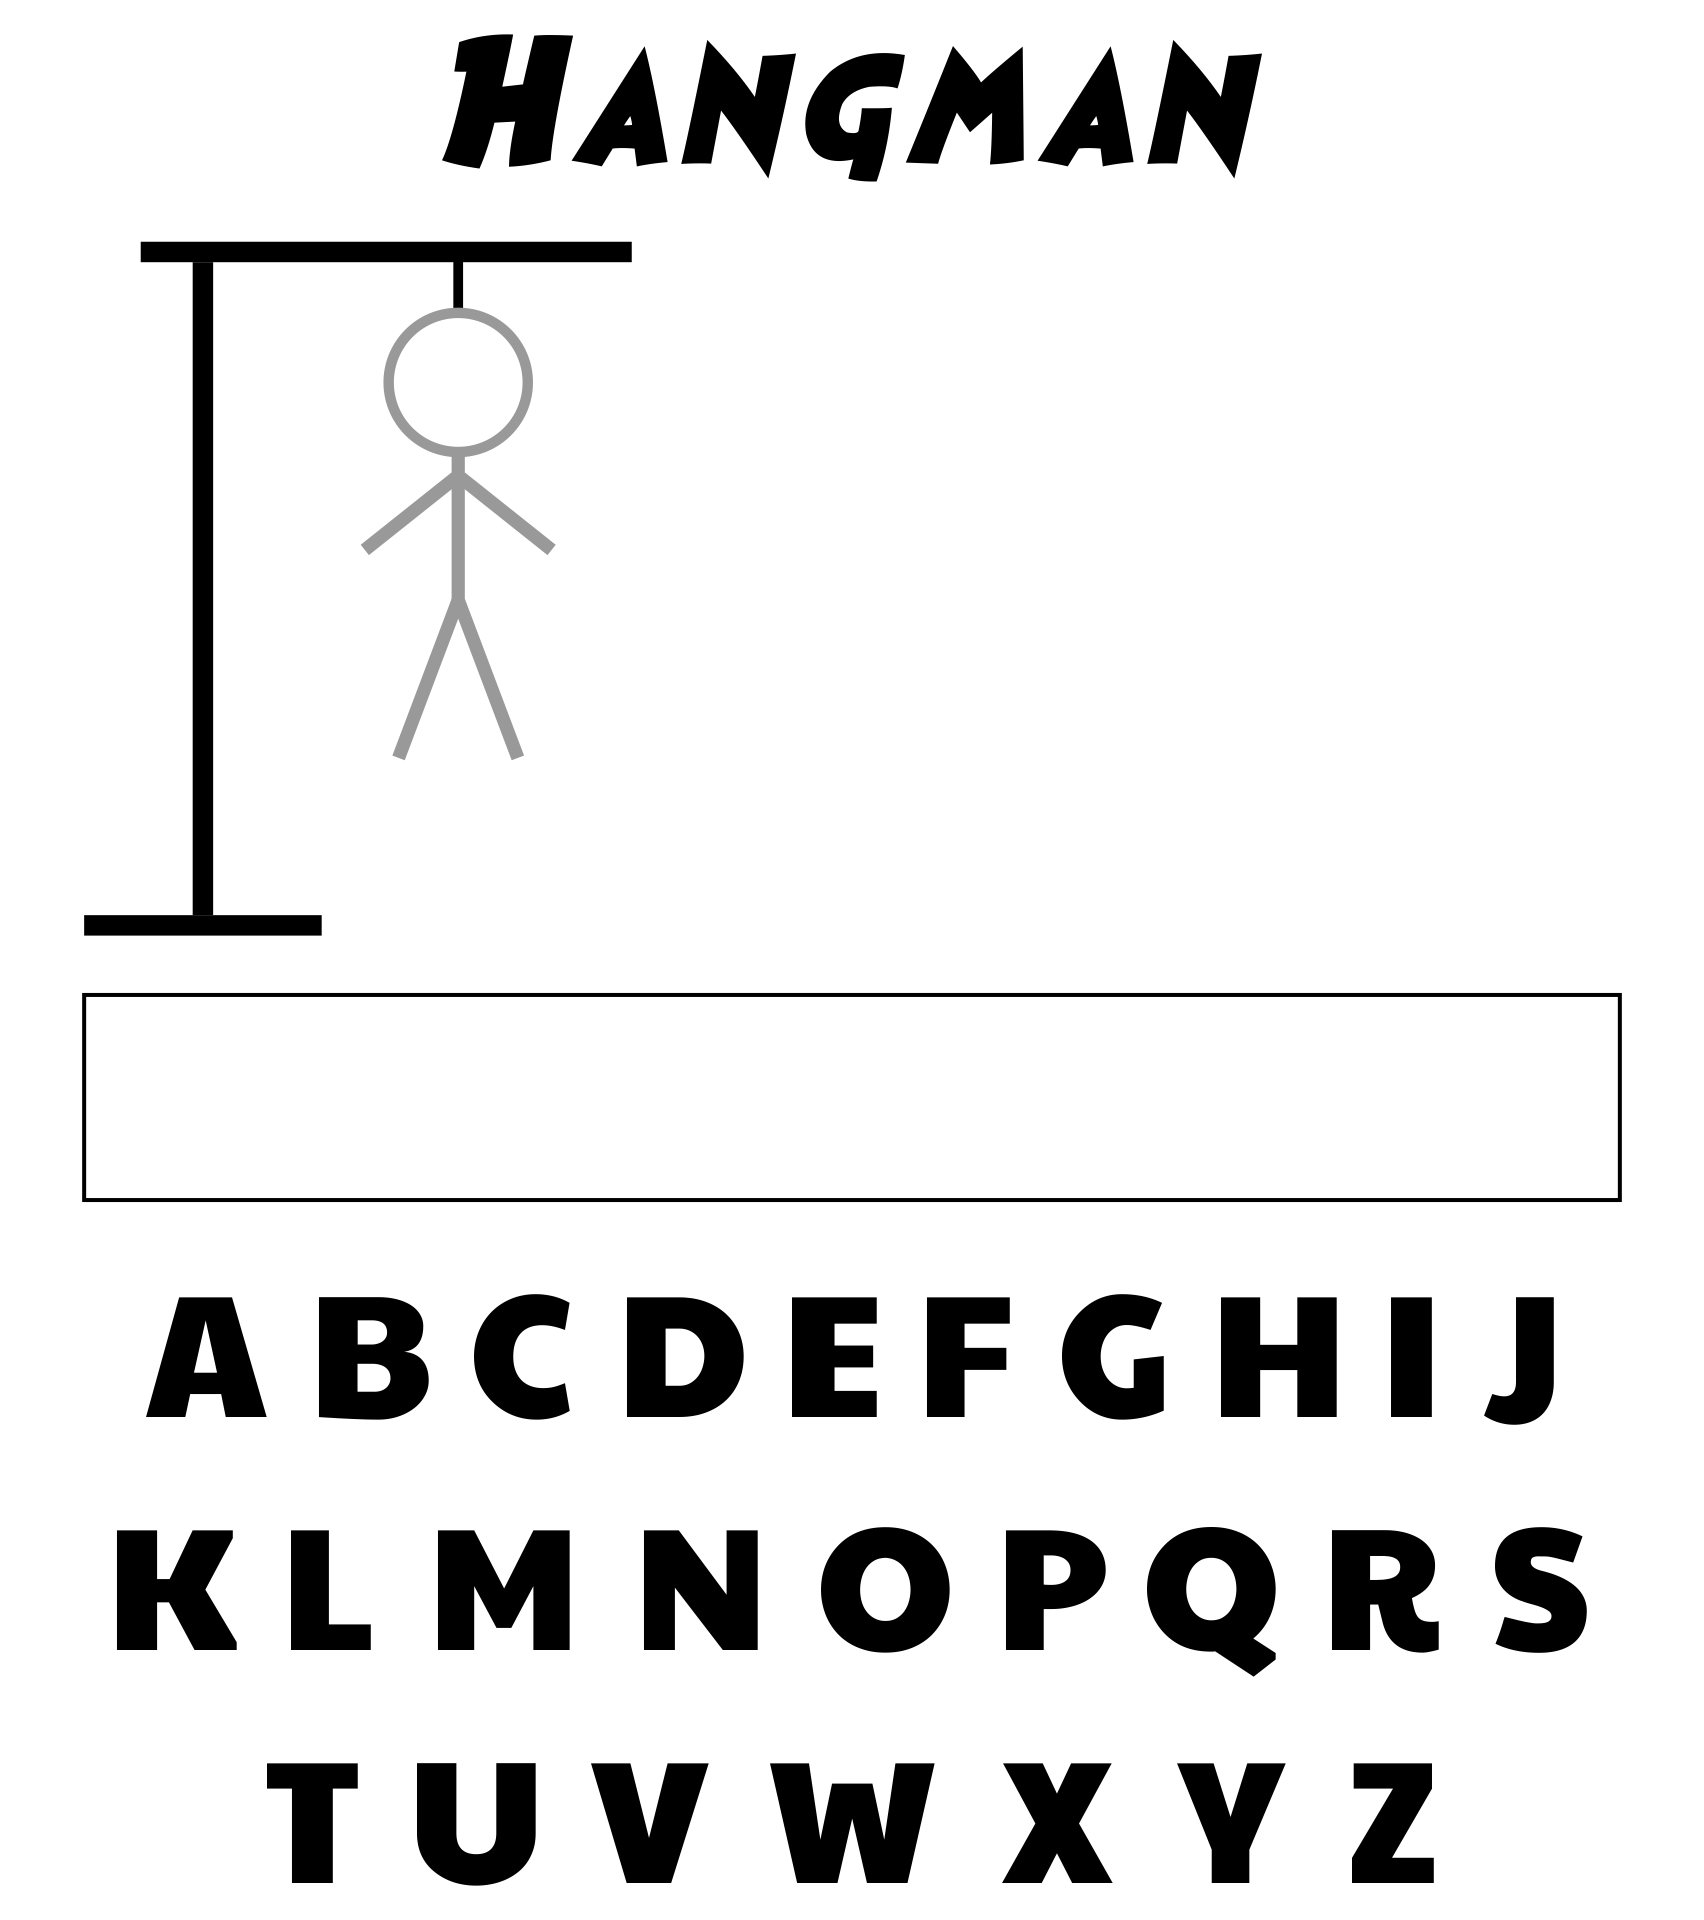 free-printable-hangman-game-templates